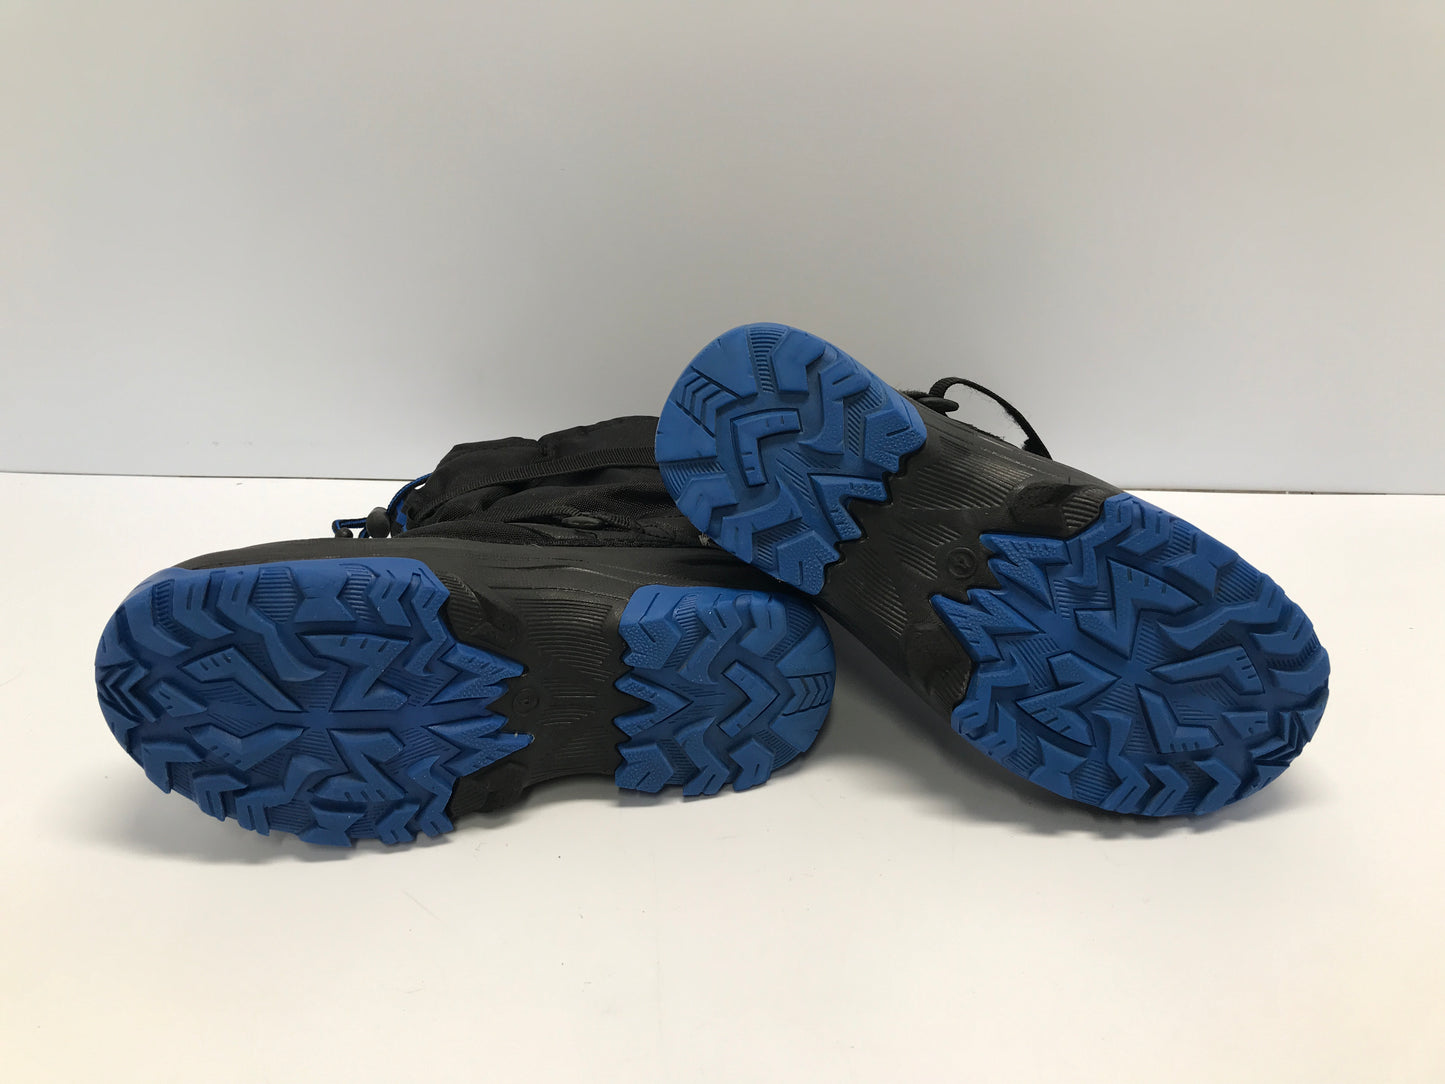 Winter Snow Boots Child Size 4 Ice Fields Black Blue Fleece Lined